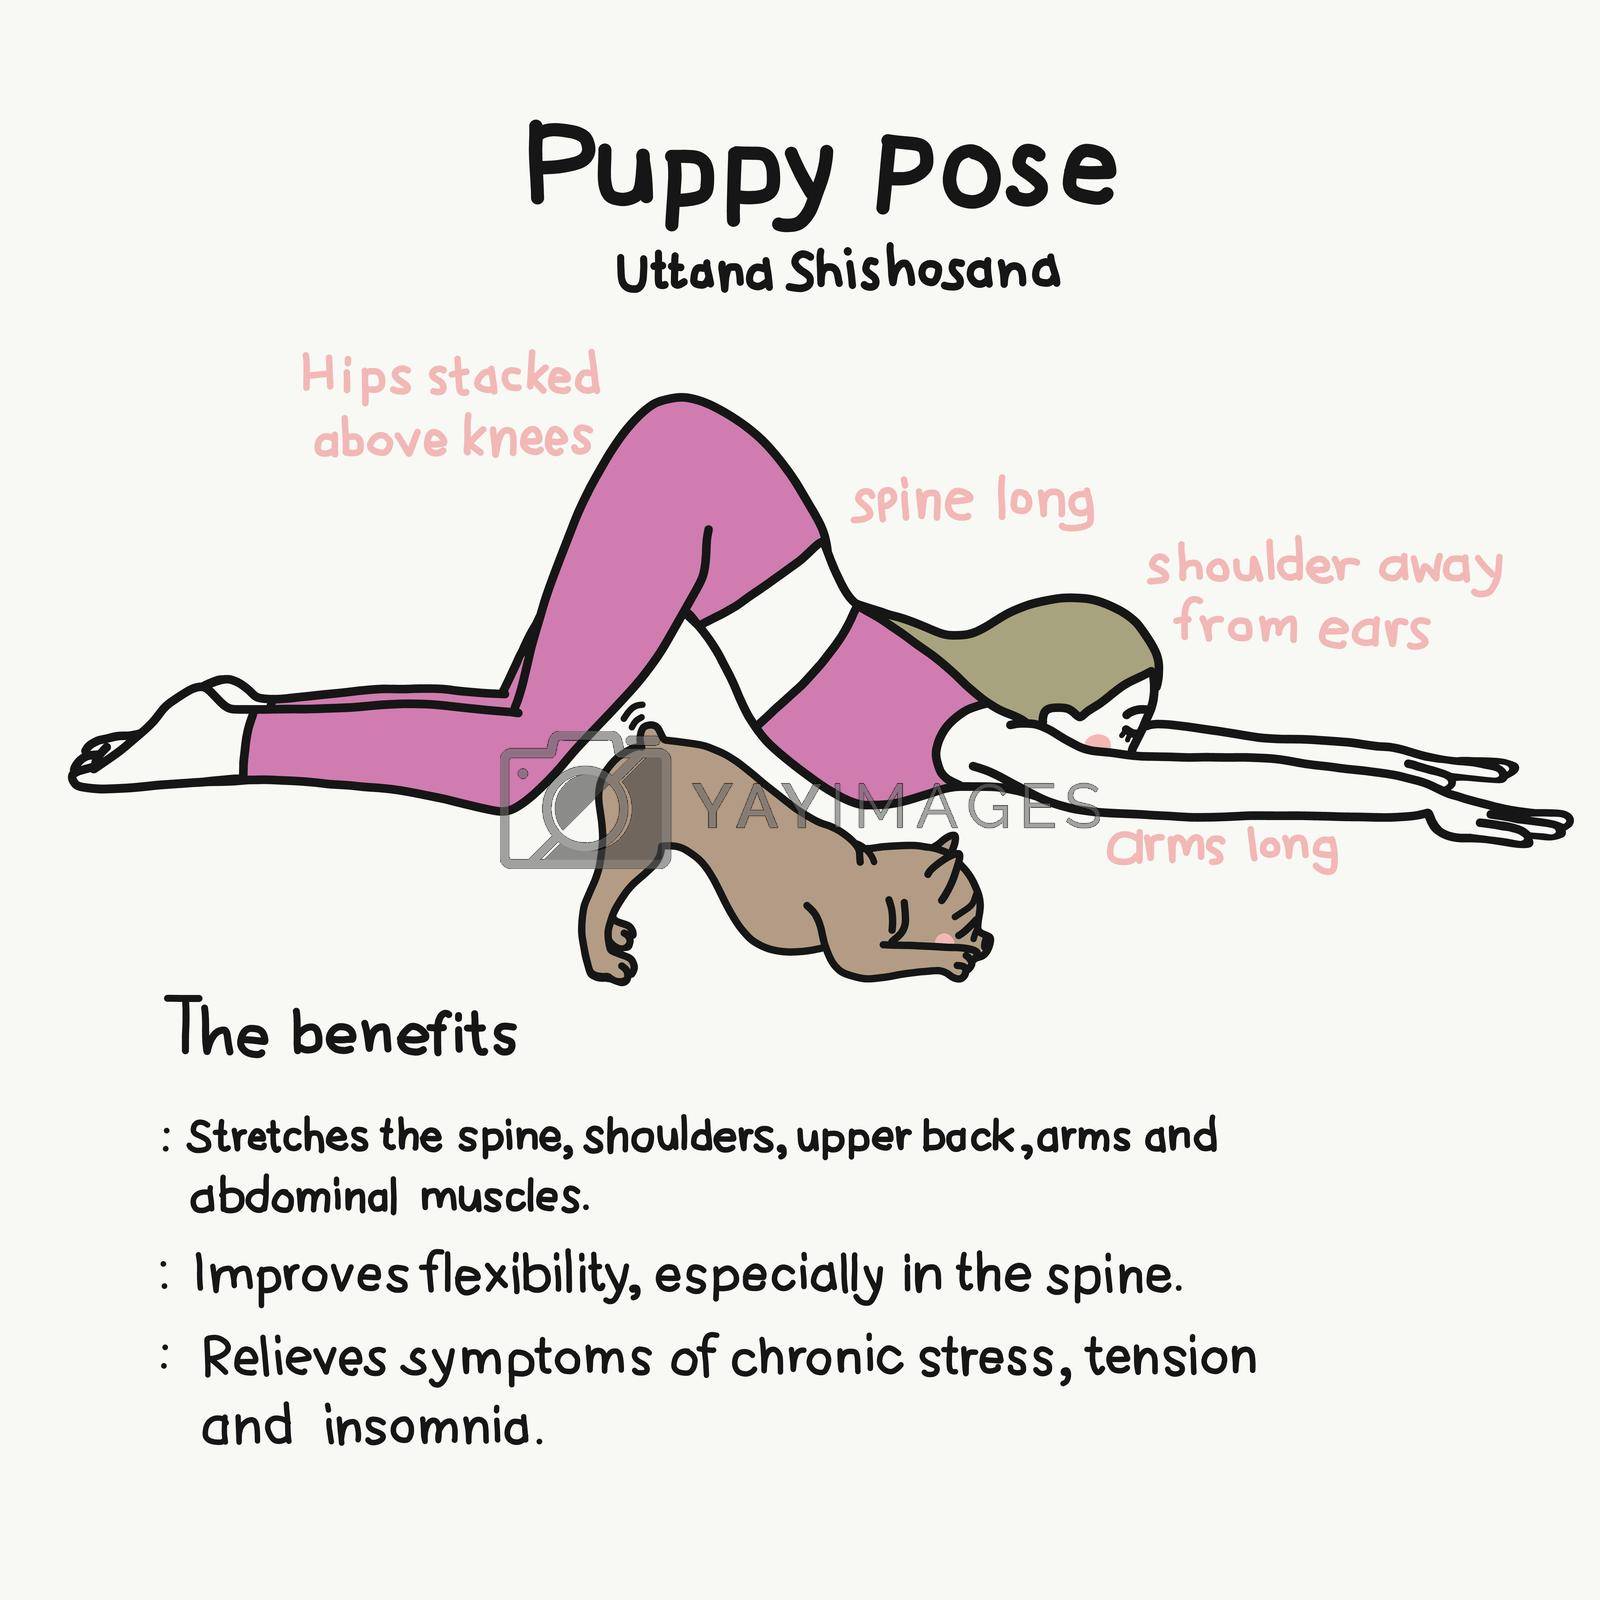 Puppy yoga pose and benefits cartoon vector illustration